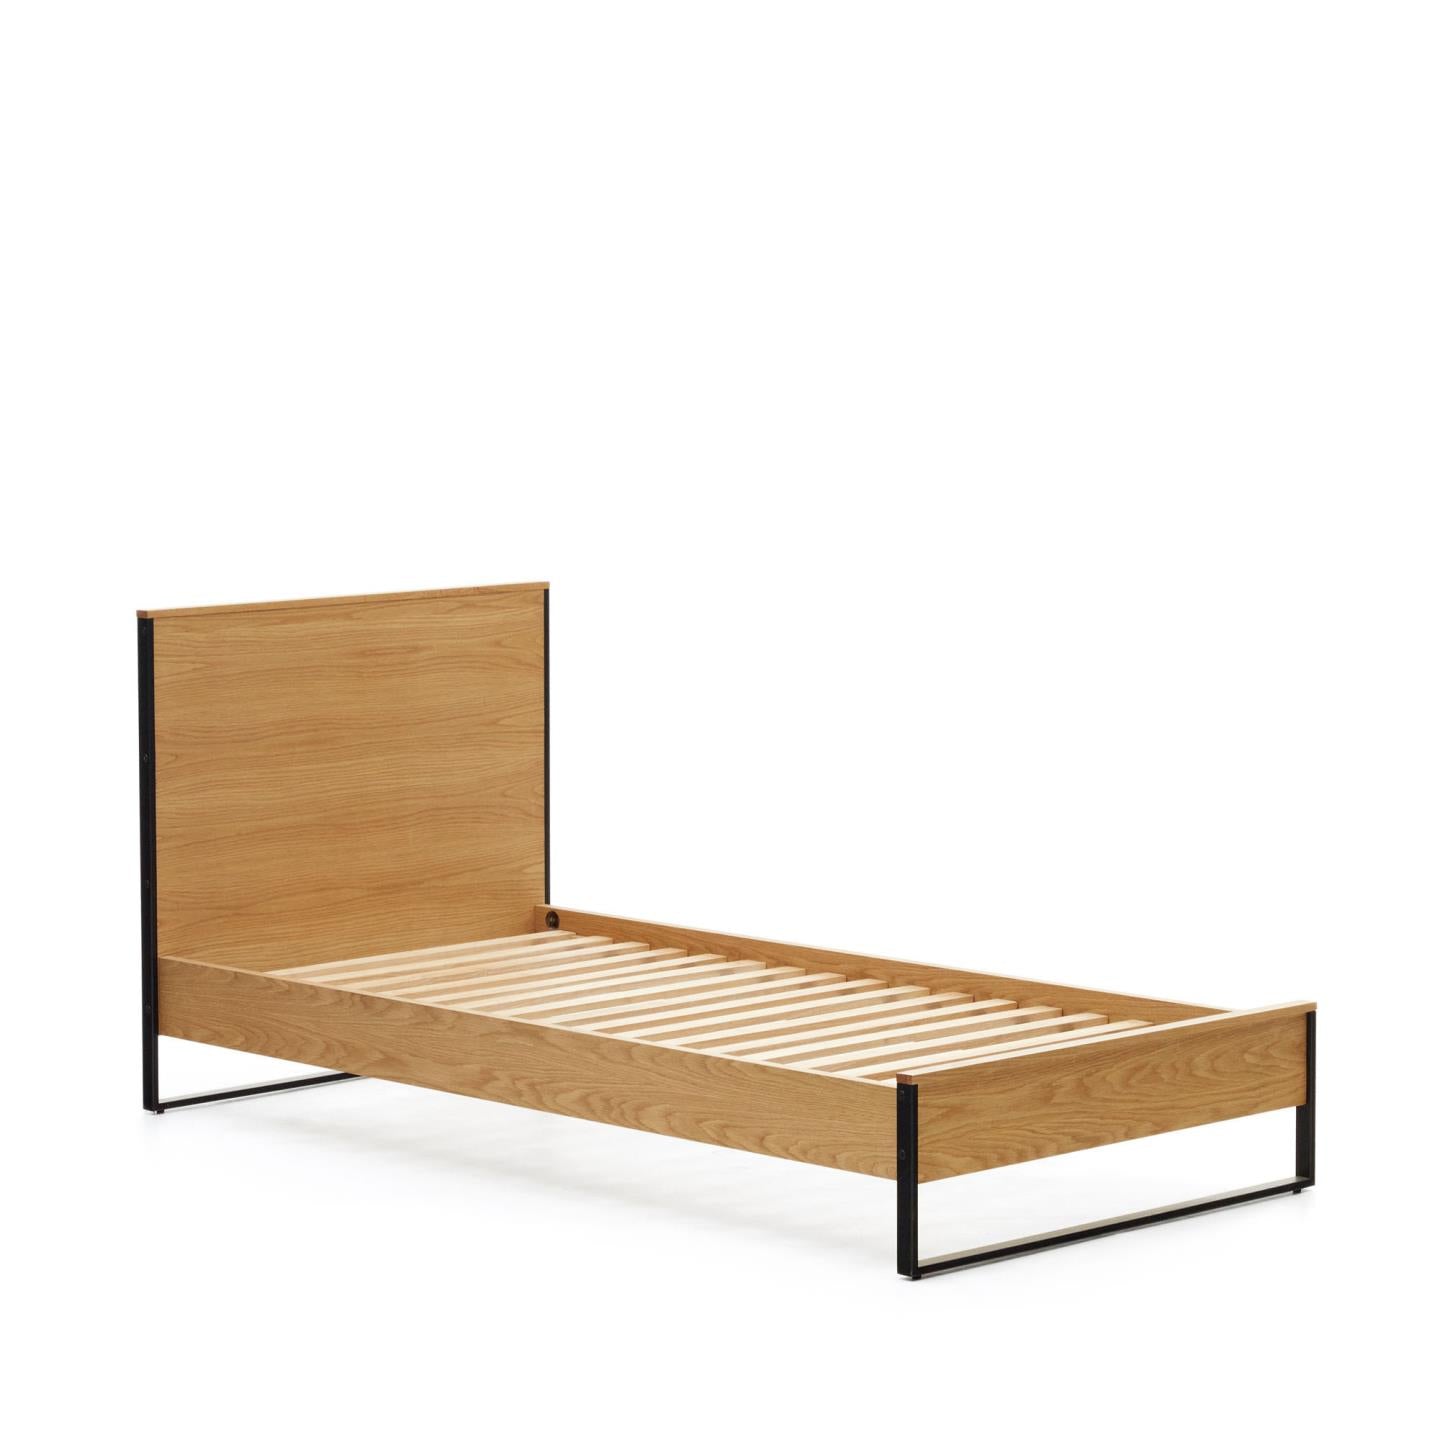 Taiana Oak Wood Veneer Small Bed with Steel Legs